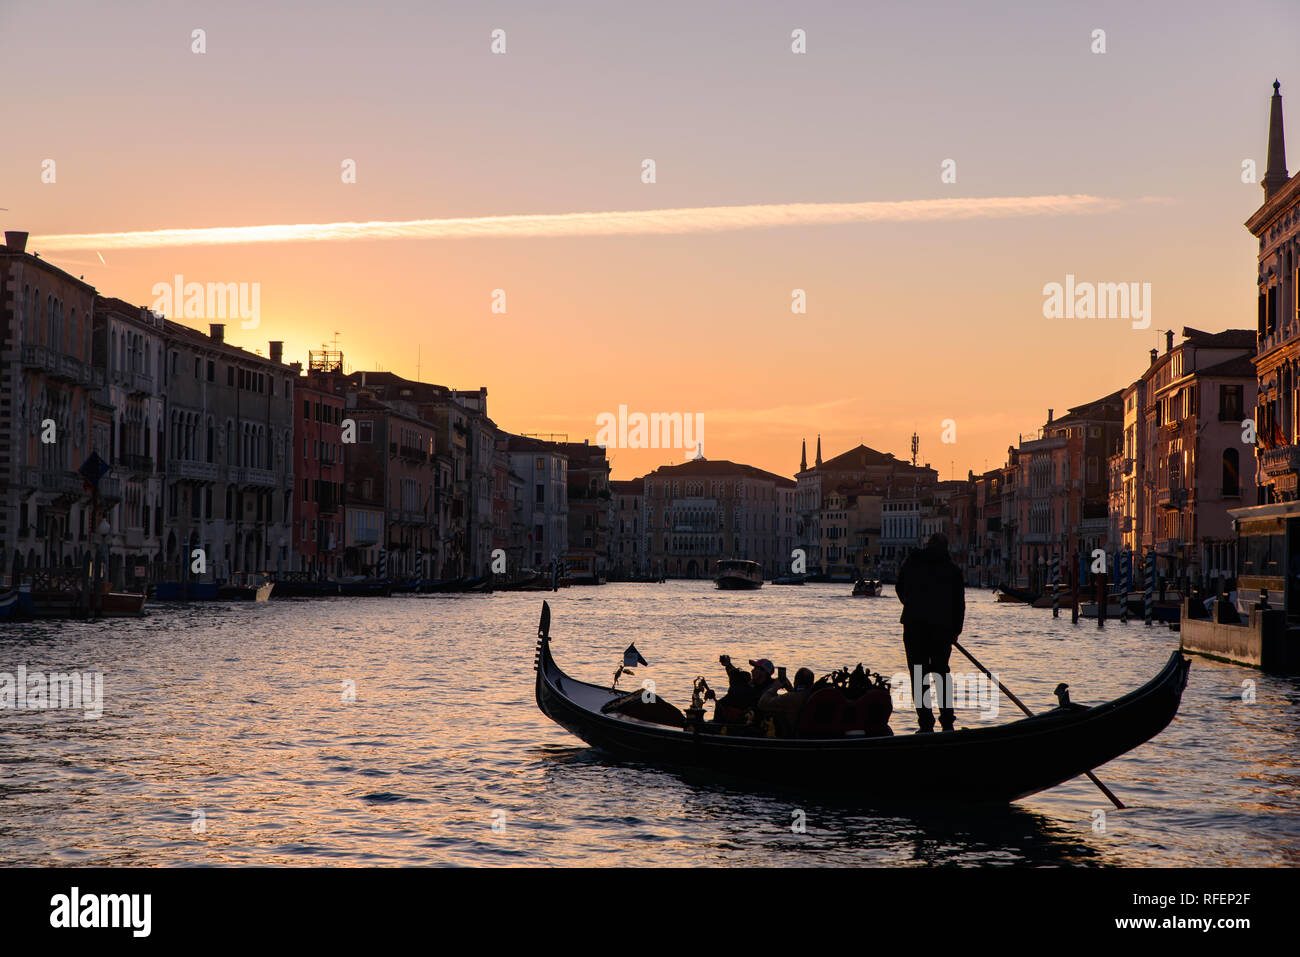 Silhouette der Gondeln auf dem Canal Grande bei Sonnenaufgang/Sonnenuntergang, Venedig, Italien Stockfoto